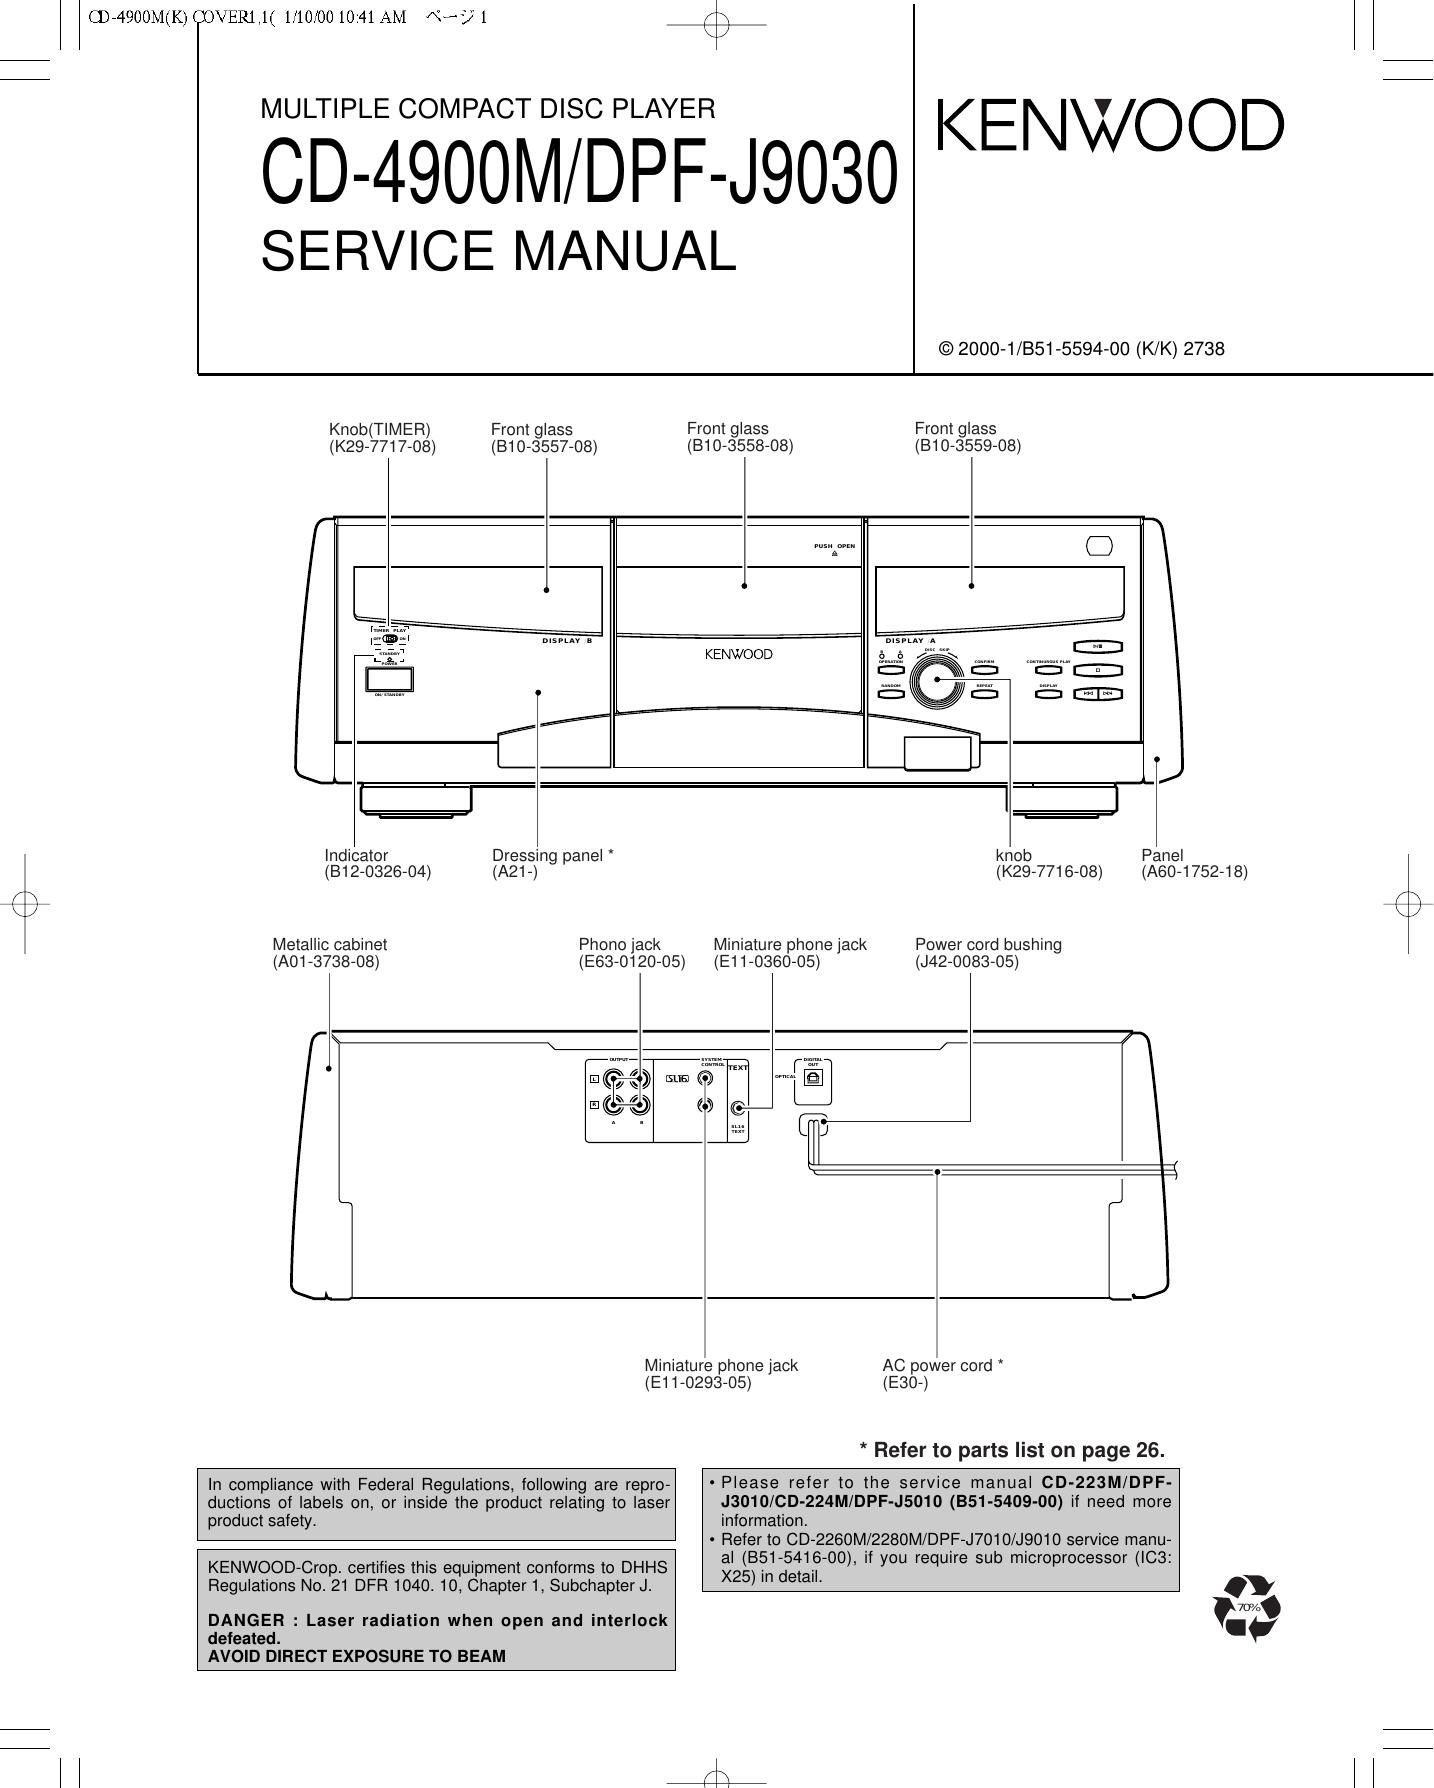 Kenwood DPFJ 9030 Service Manual